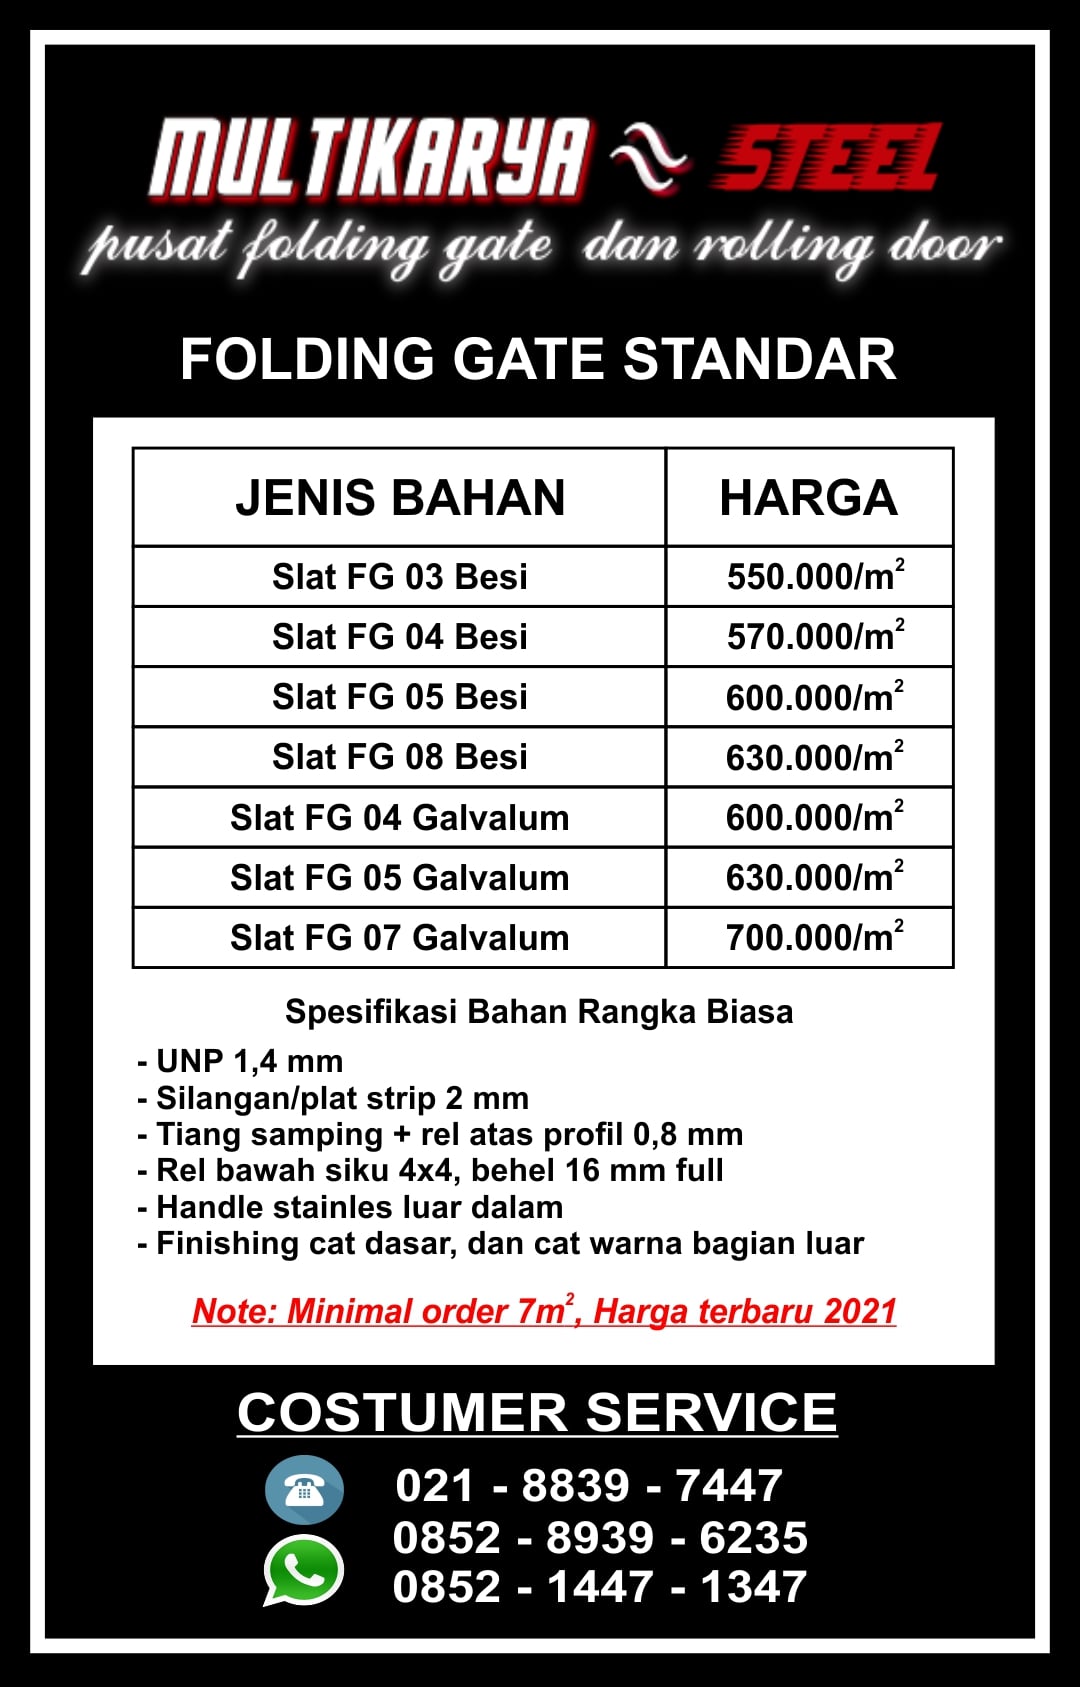 Daftar Harga Folding Gate Pondok Gede Murah Multi Karya Steel